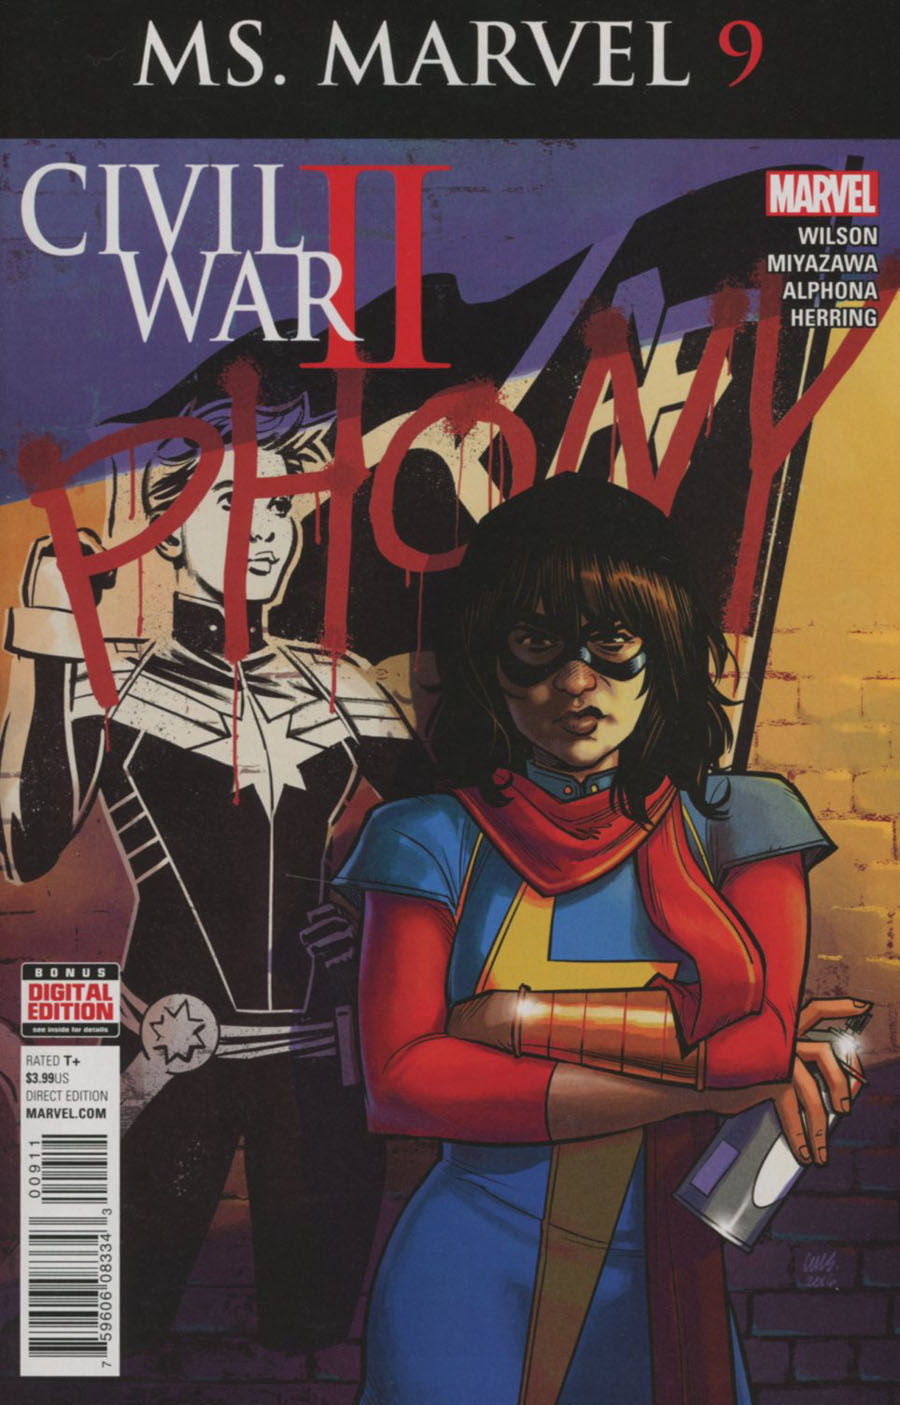 Ms Marvel Vol 4 #9 (Civil War II Tie-In)